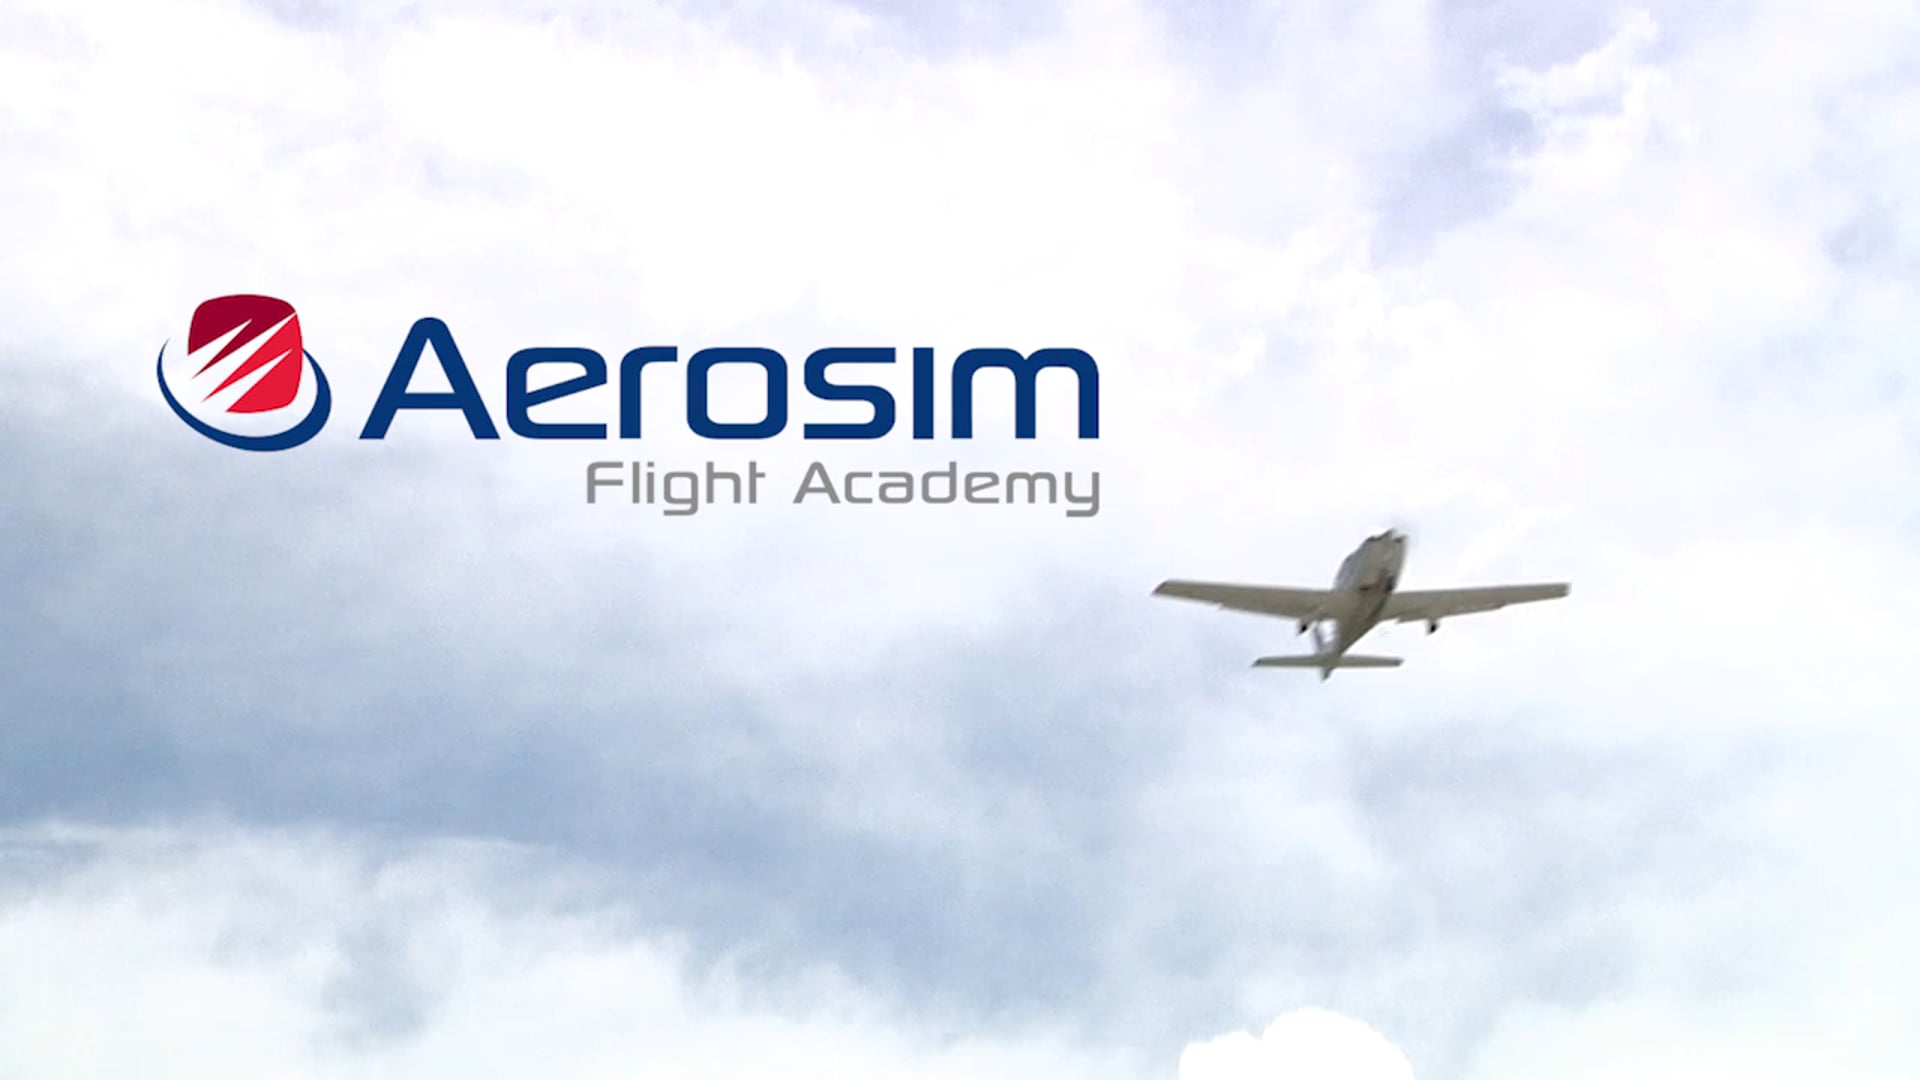 Aerosim Promotional Video